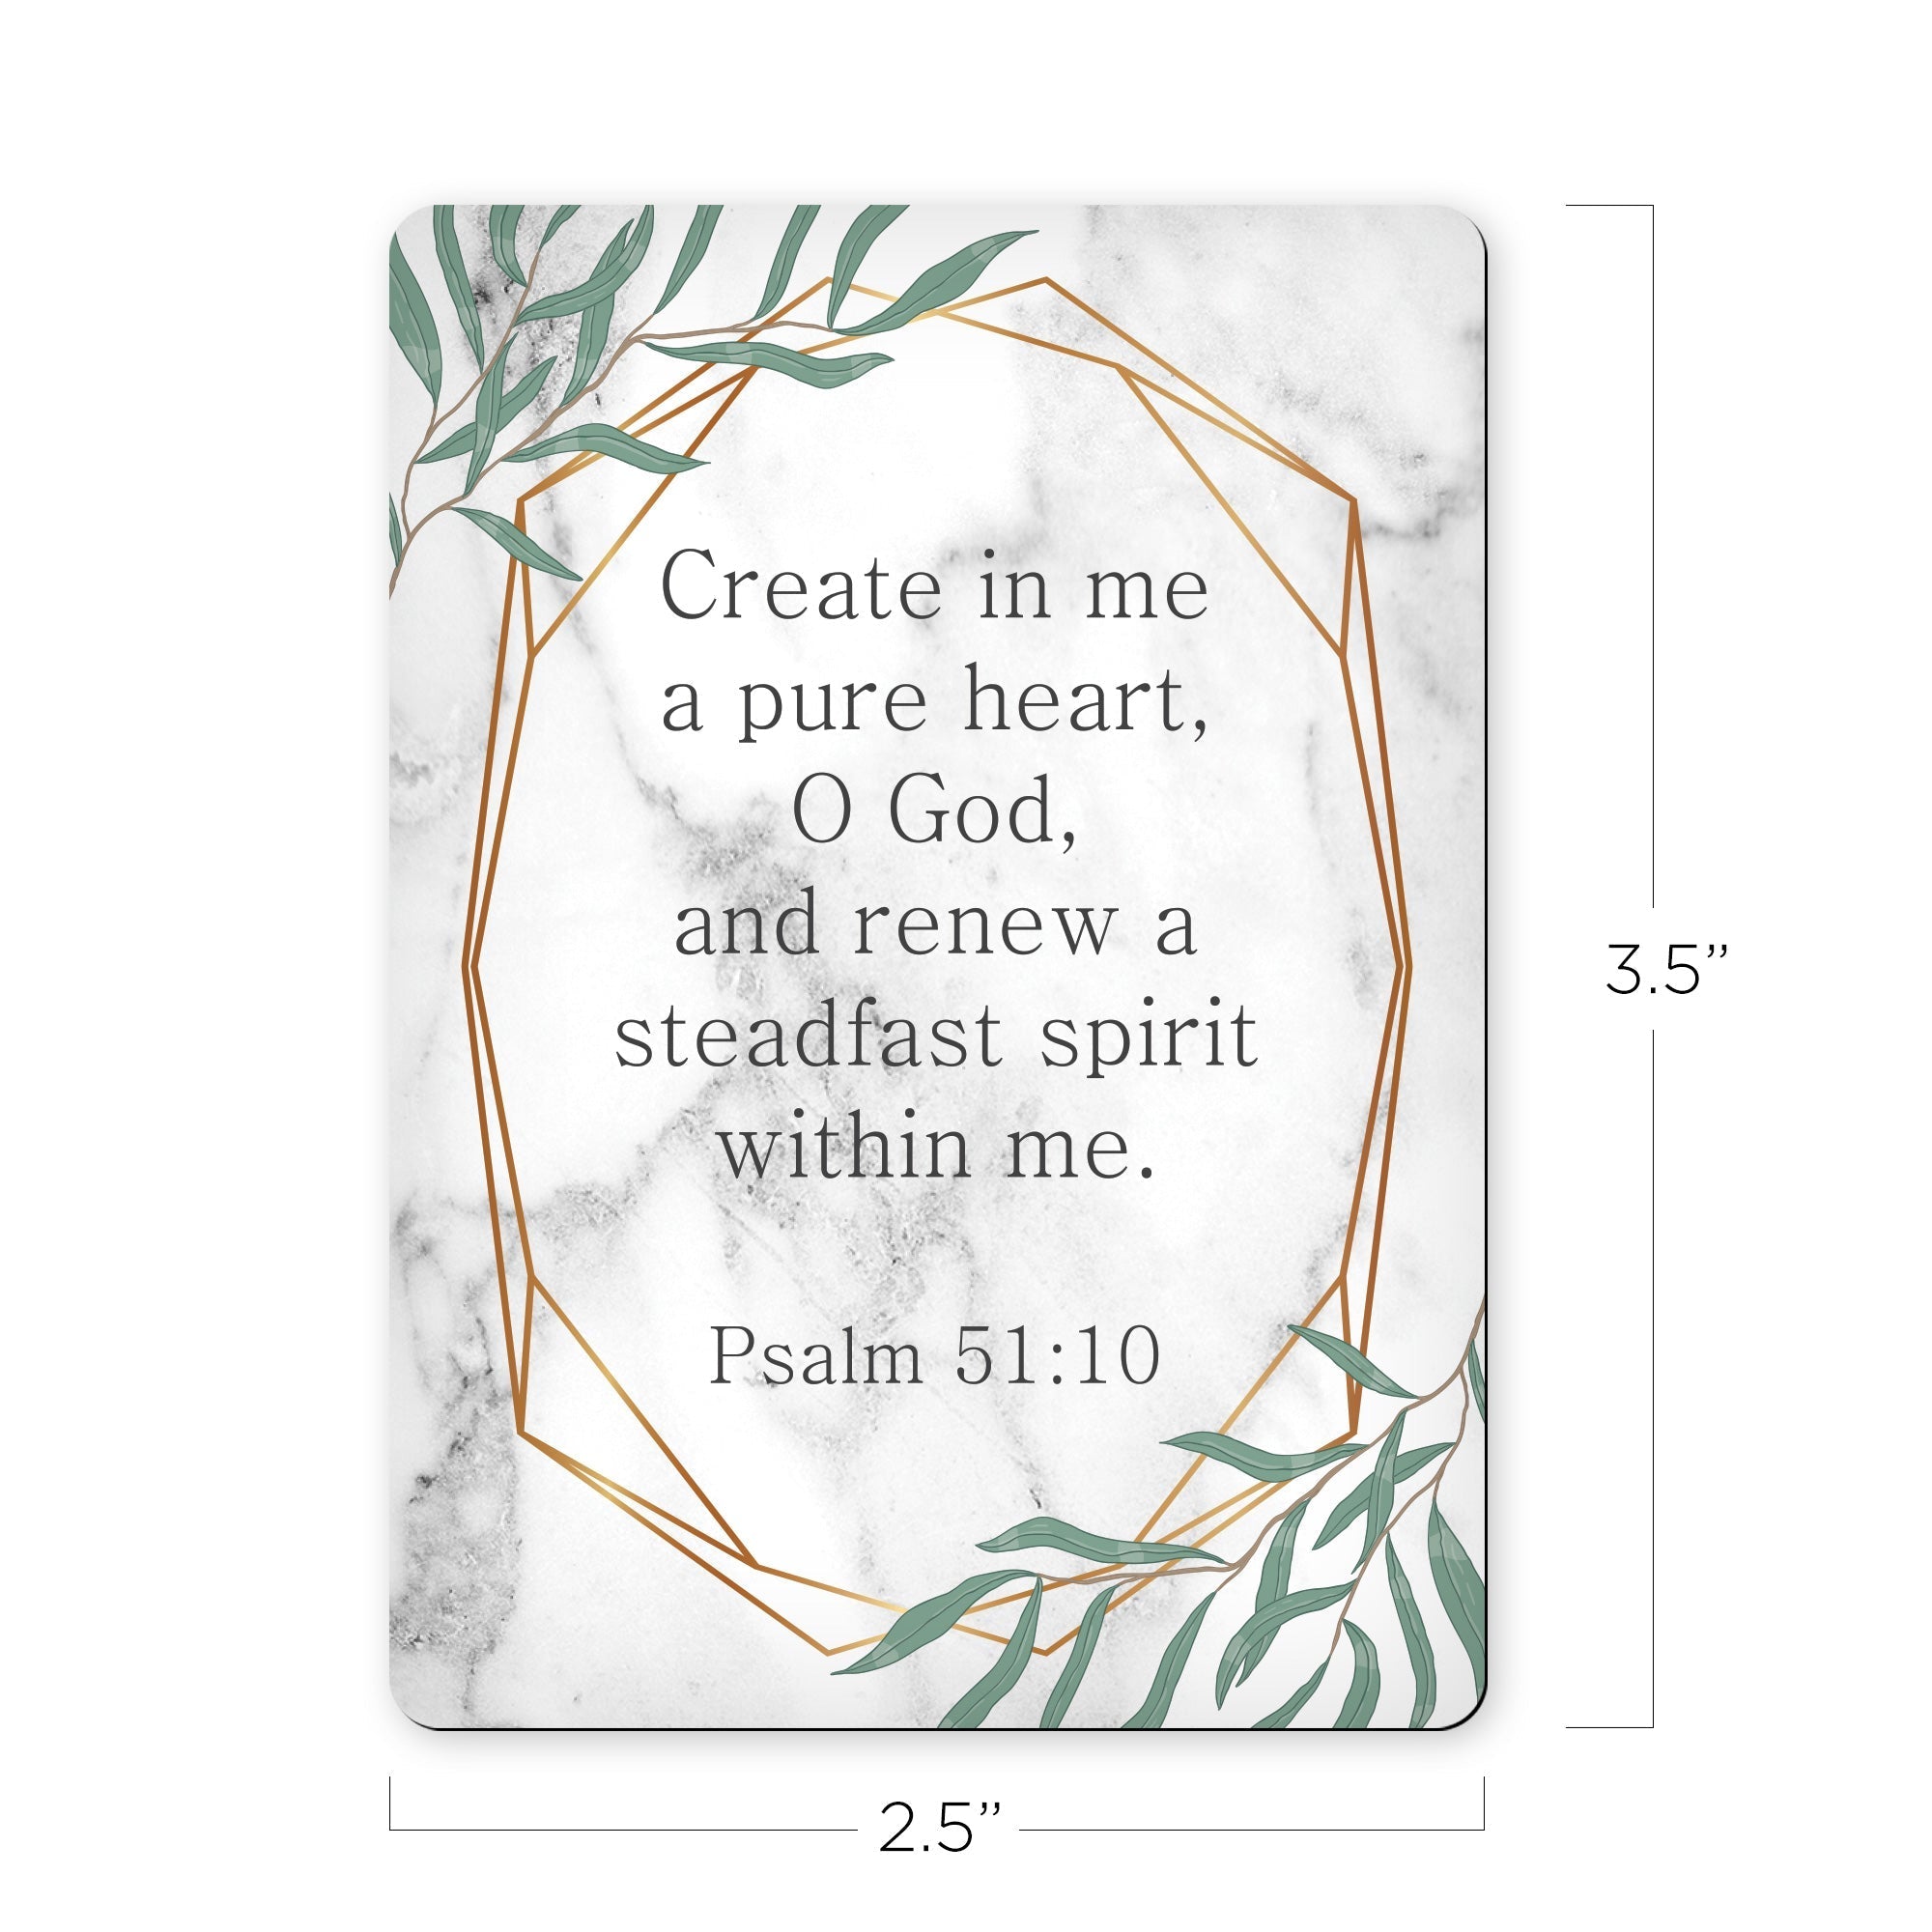 Create in me a pure heart - Psalm 51:10 - Scripture Magnet